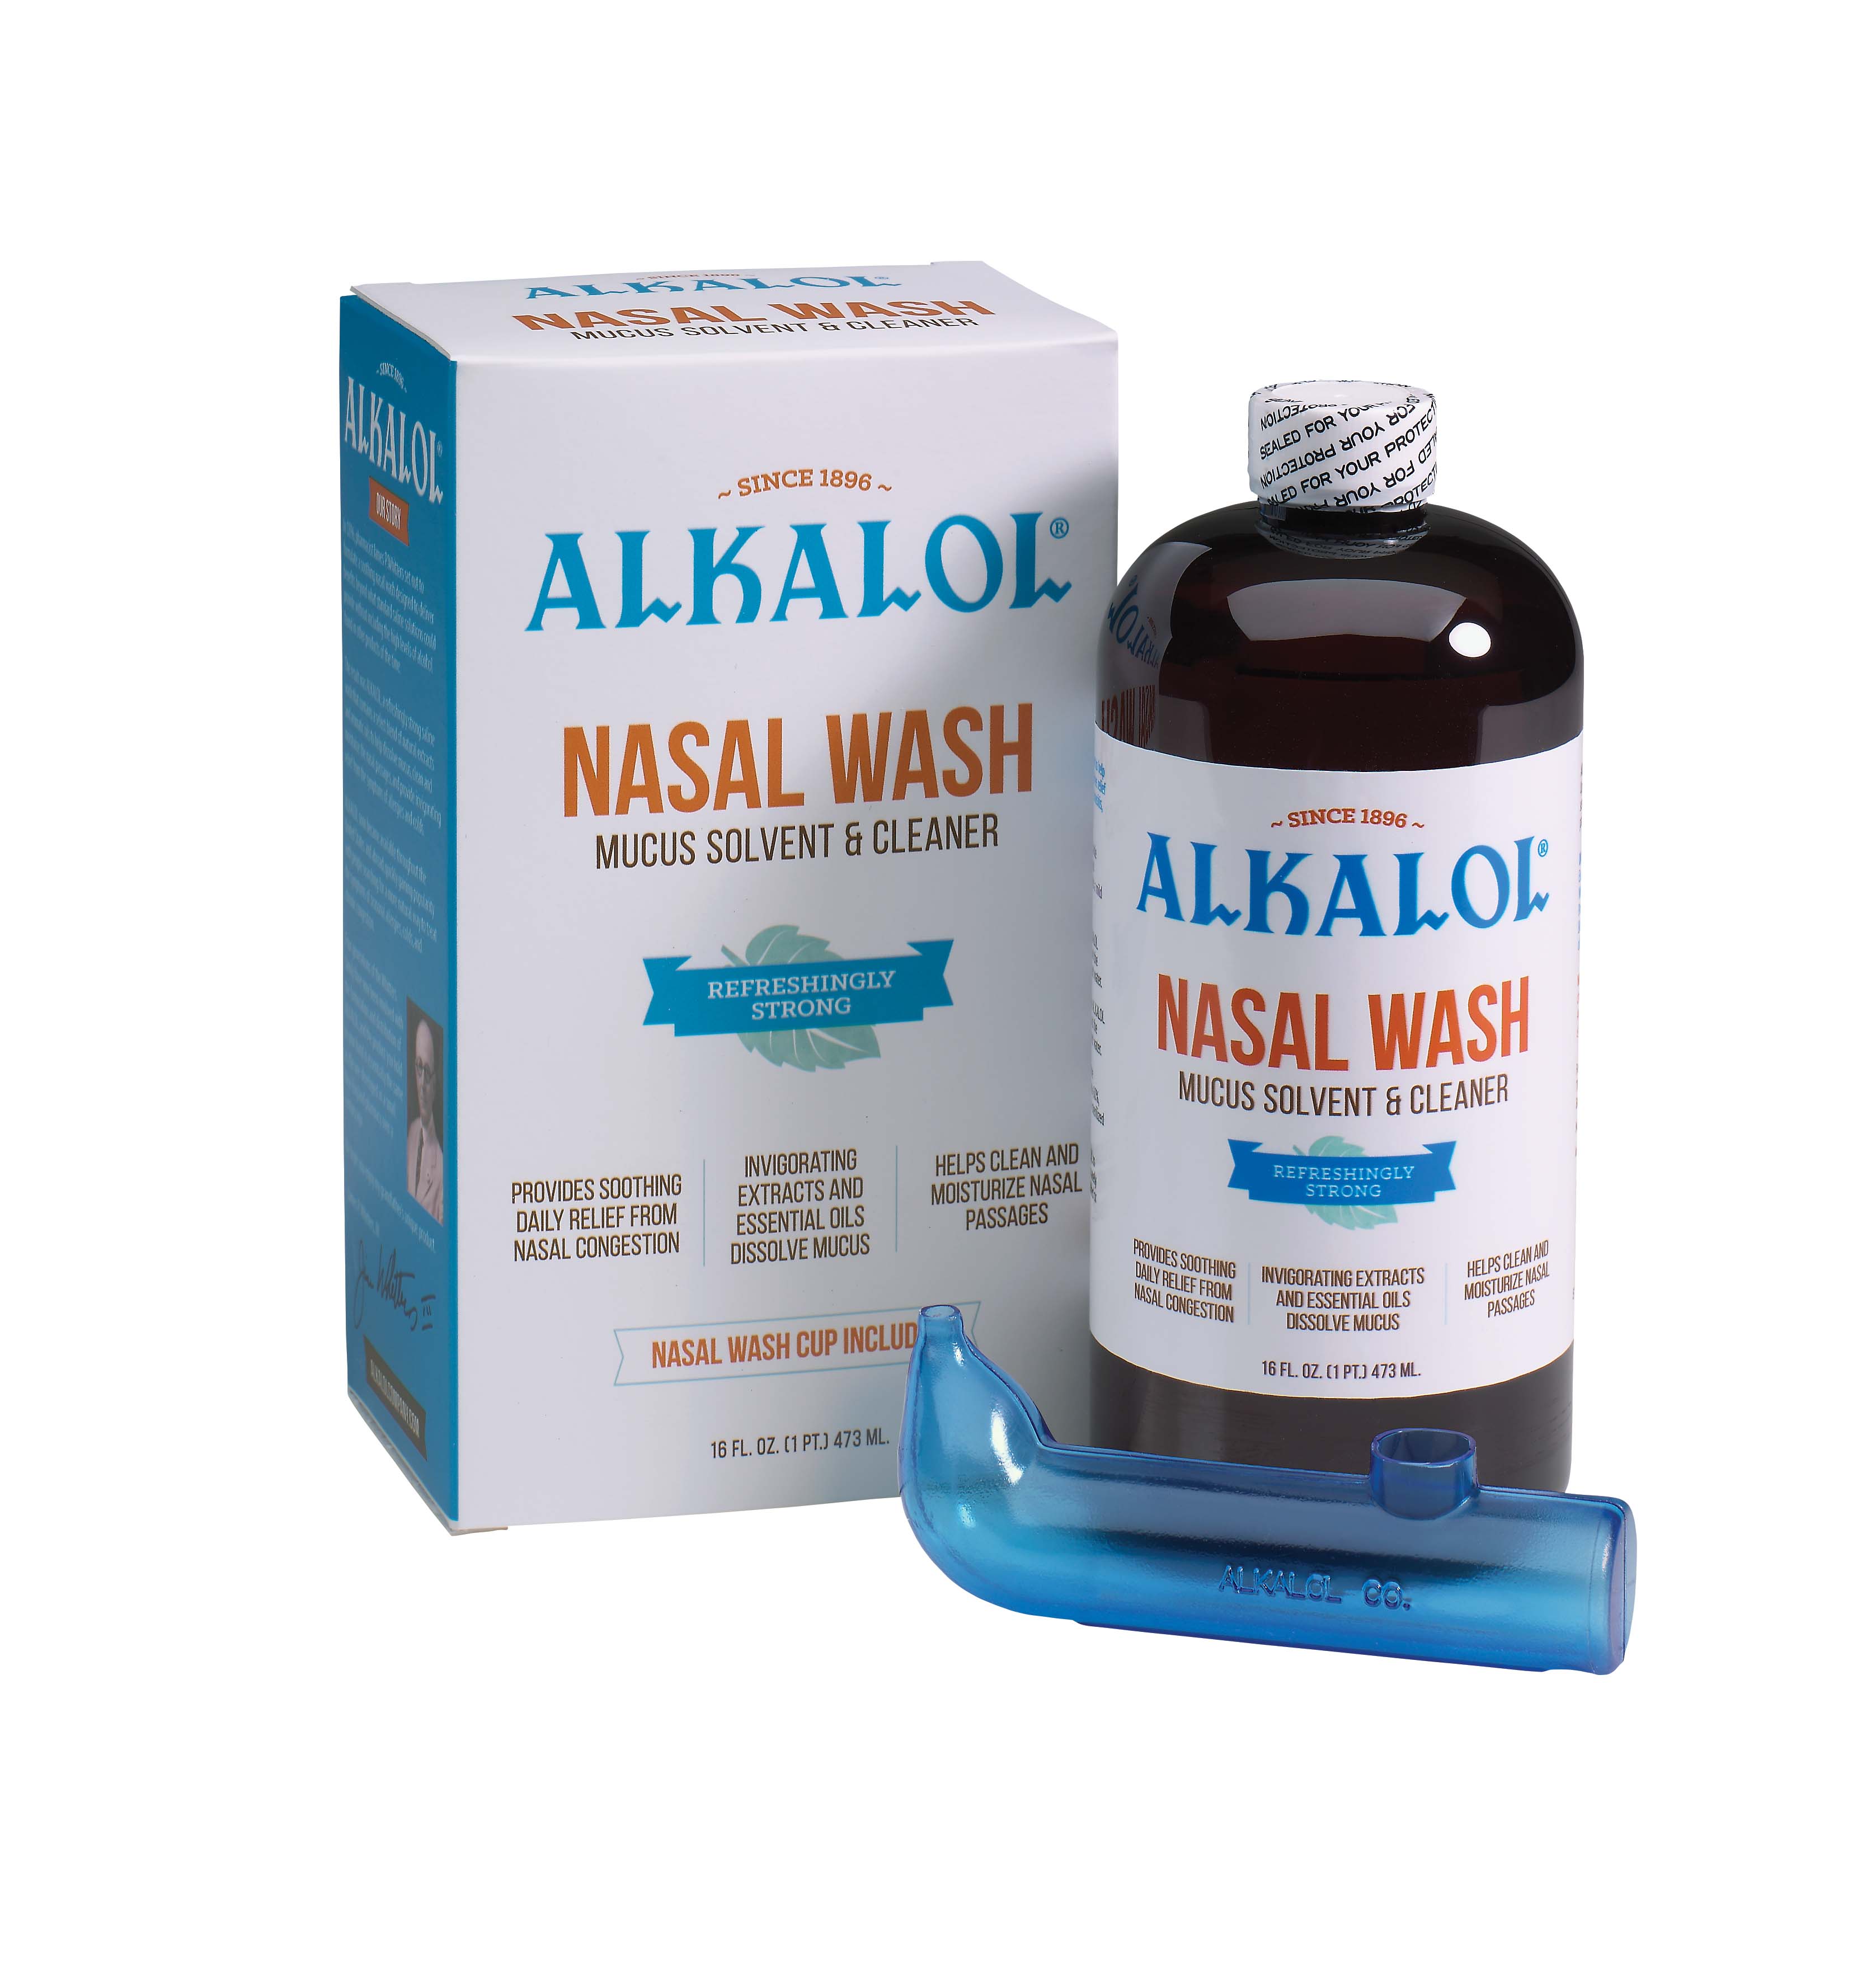 Alkalol Nasal Wash Kit